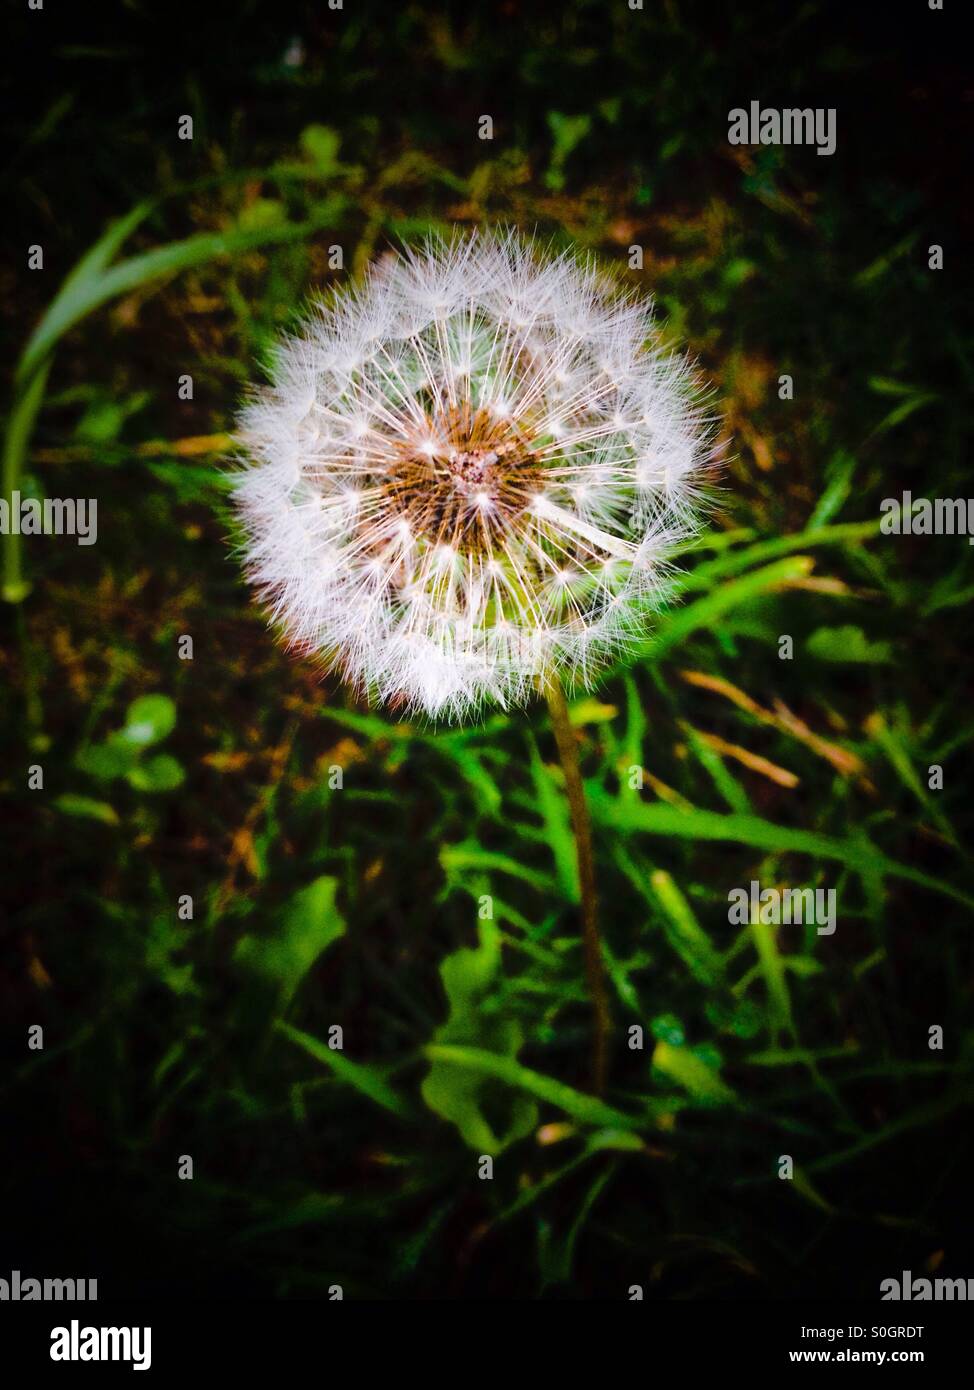 Dandelion closeup in a green field Stock Photo